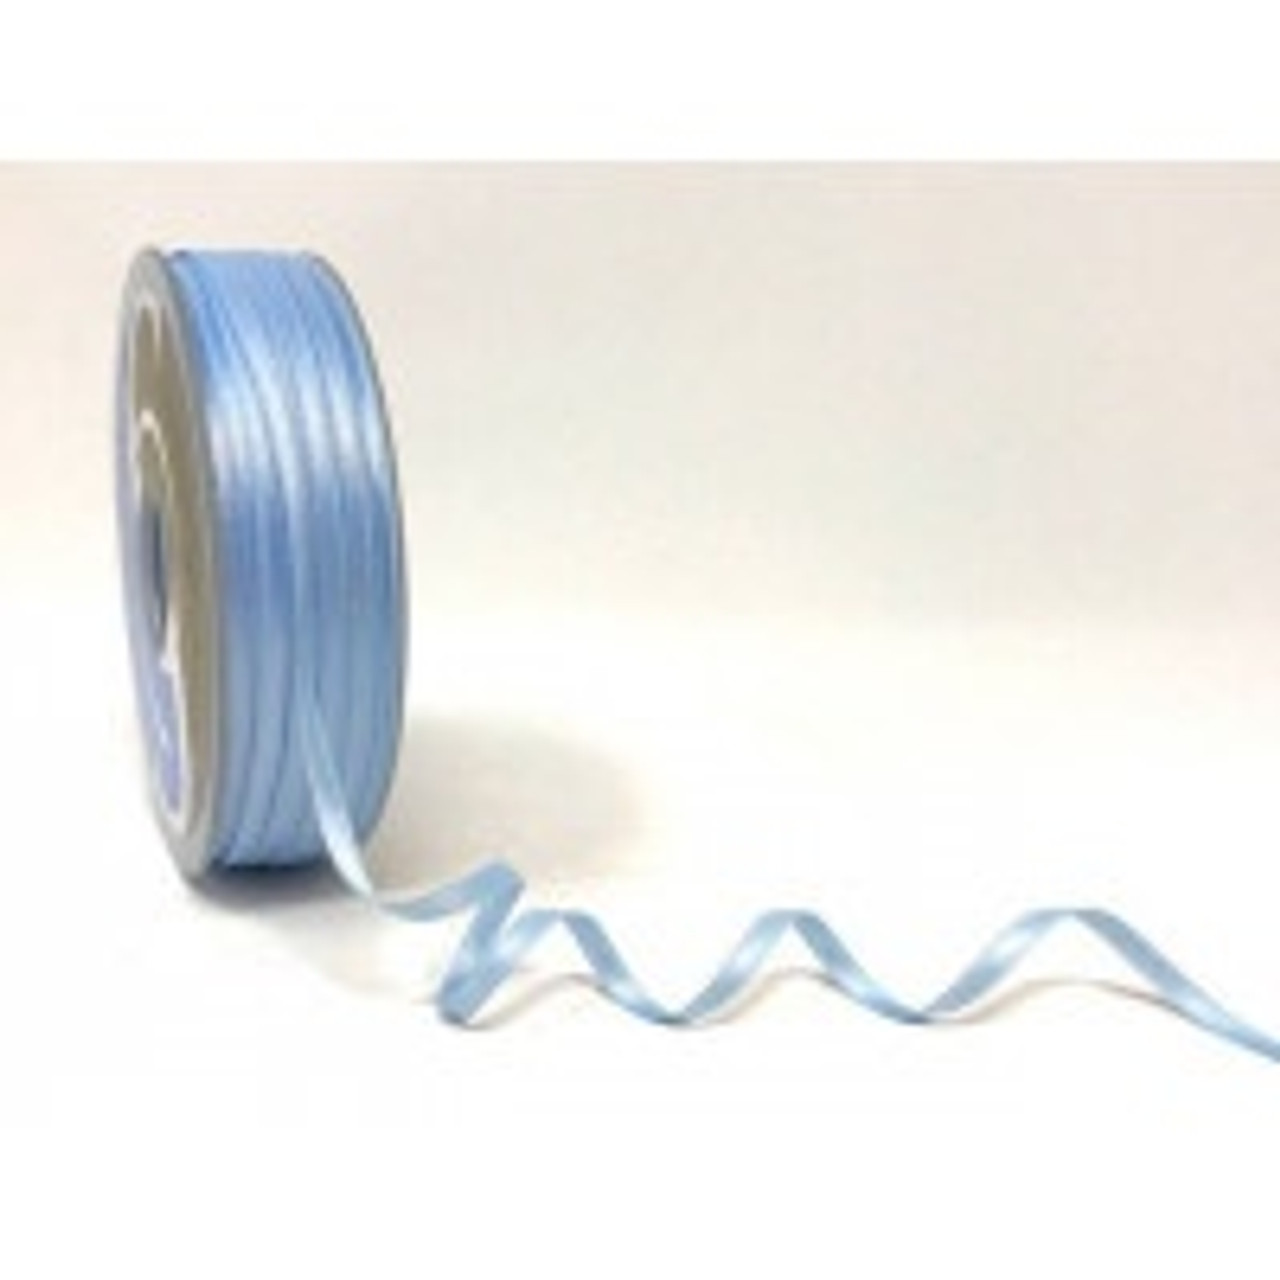 Pale Blue Satin Ribbon, 3mm wide, Sold Per Metre